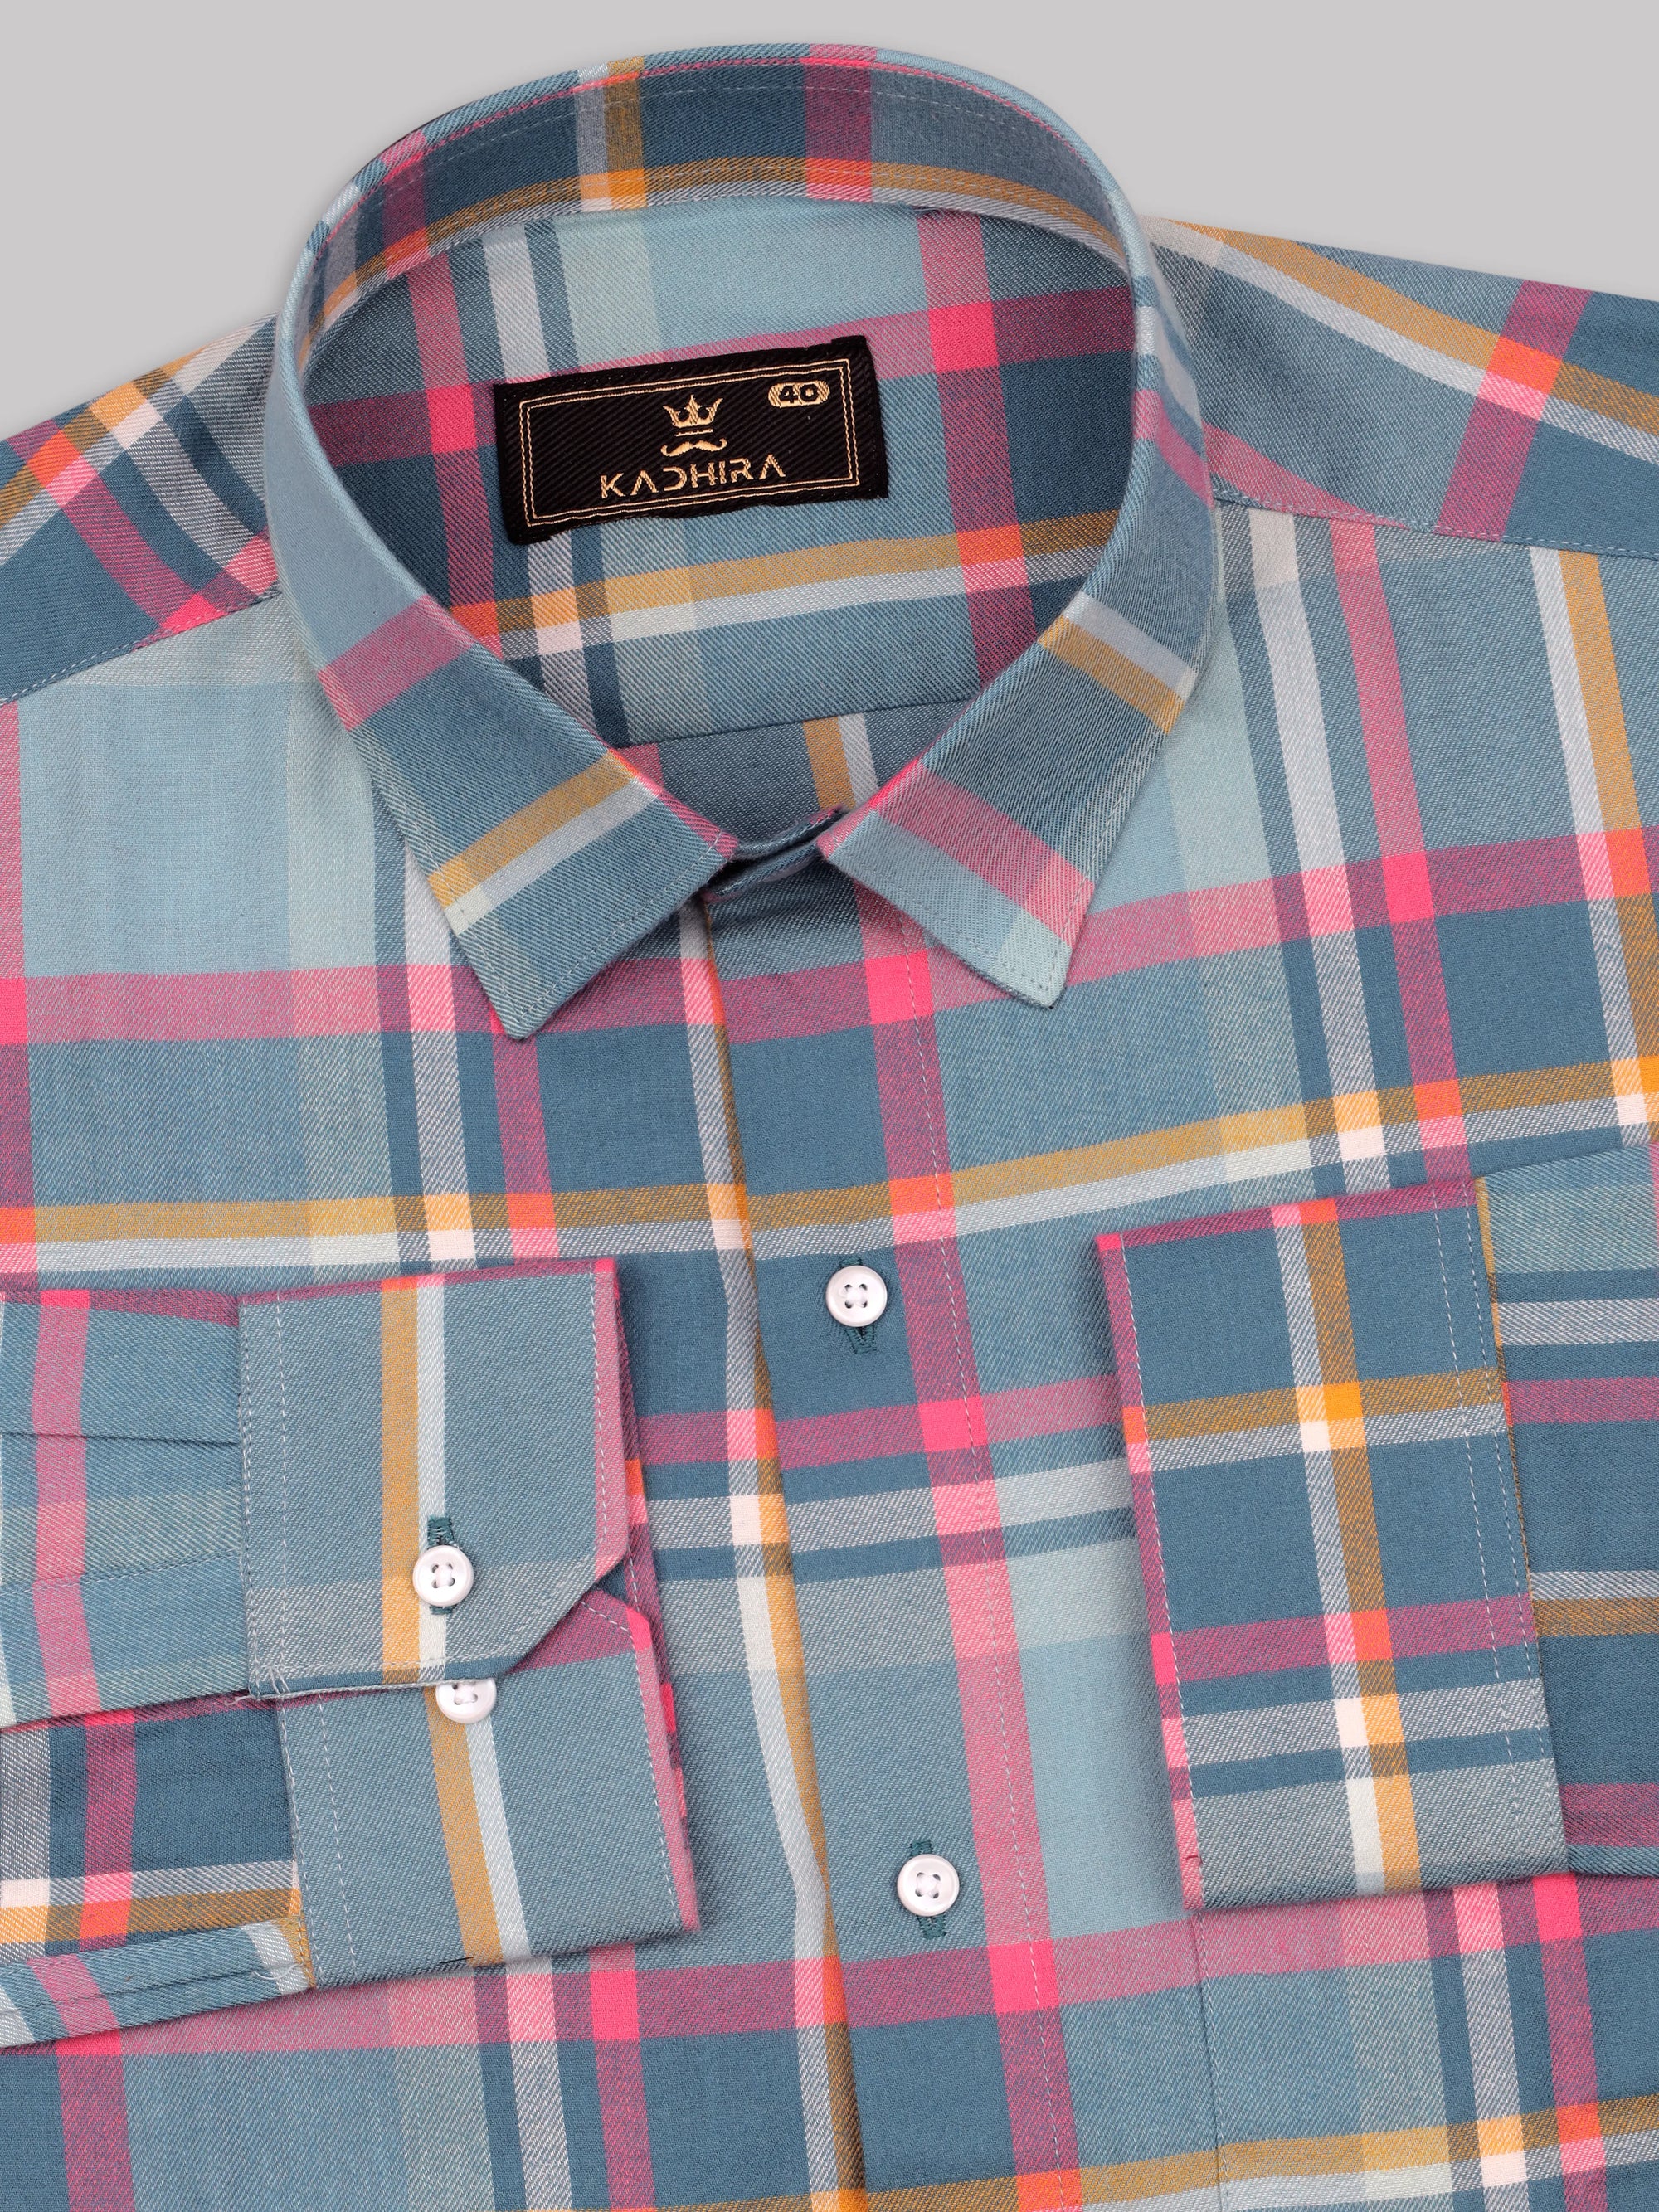 Teal Blue With Pink Tartan Checks Premium Cotton Shirt